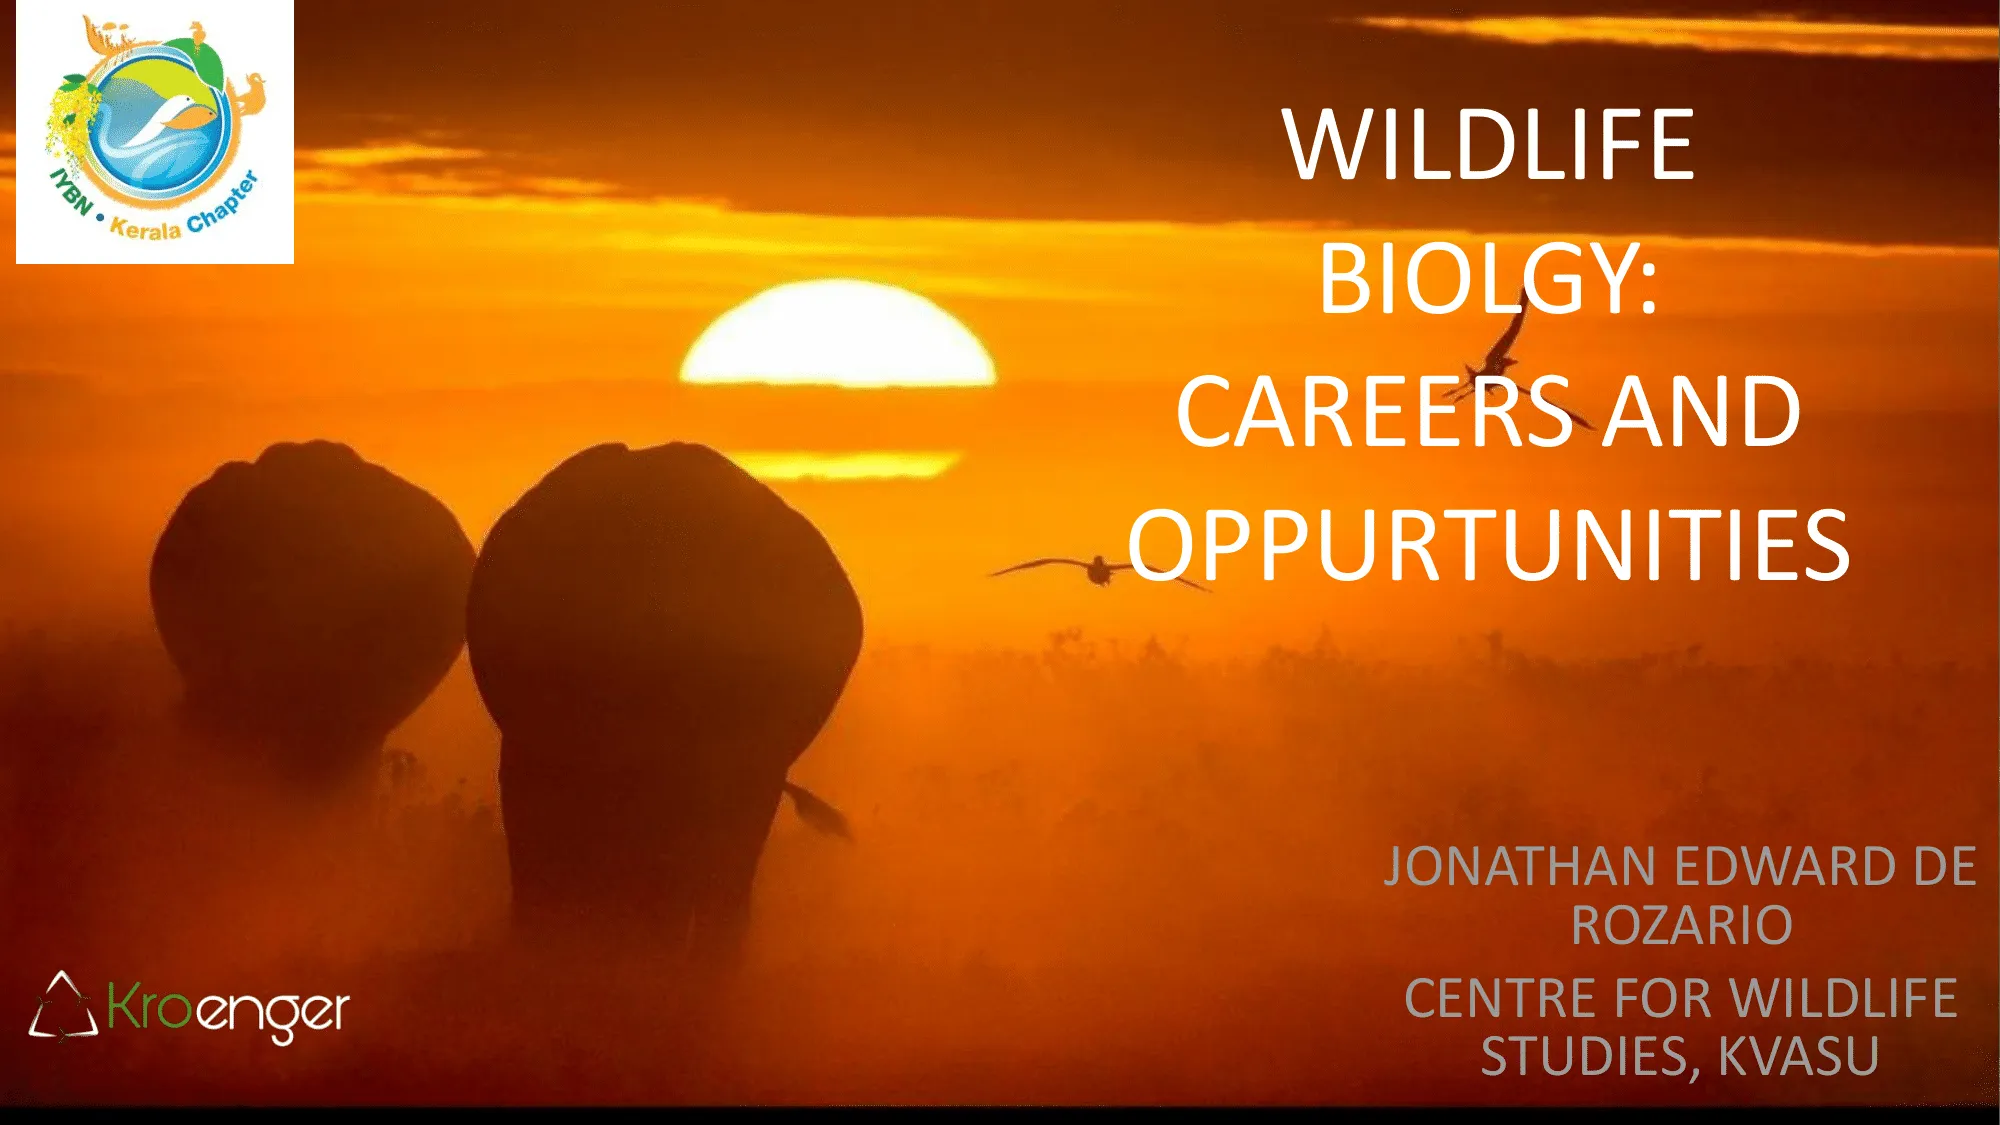 WildLife Biology: Careers and Oppurtunities